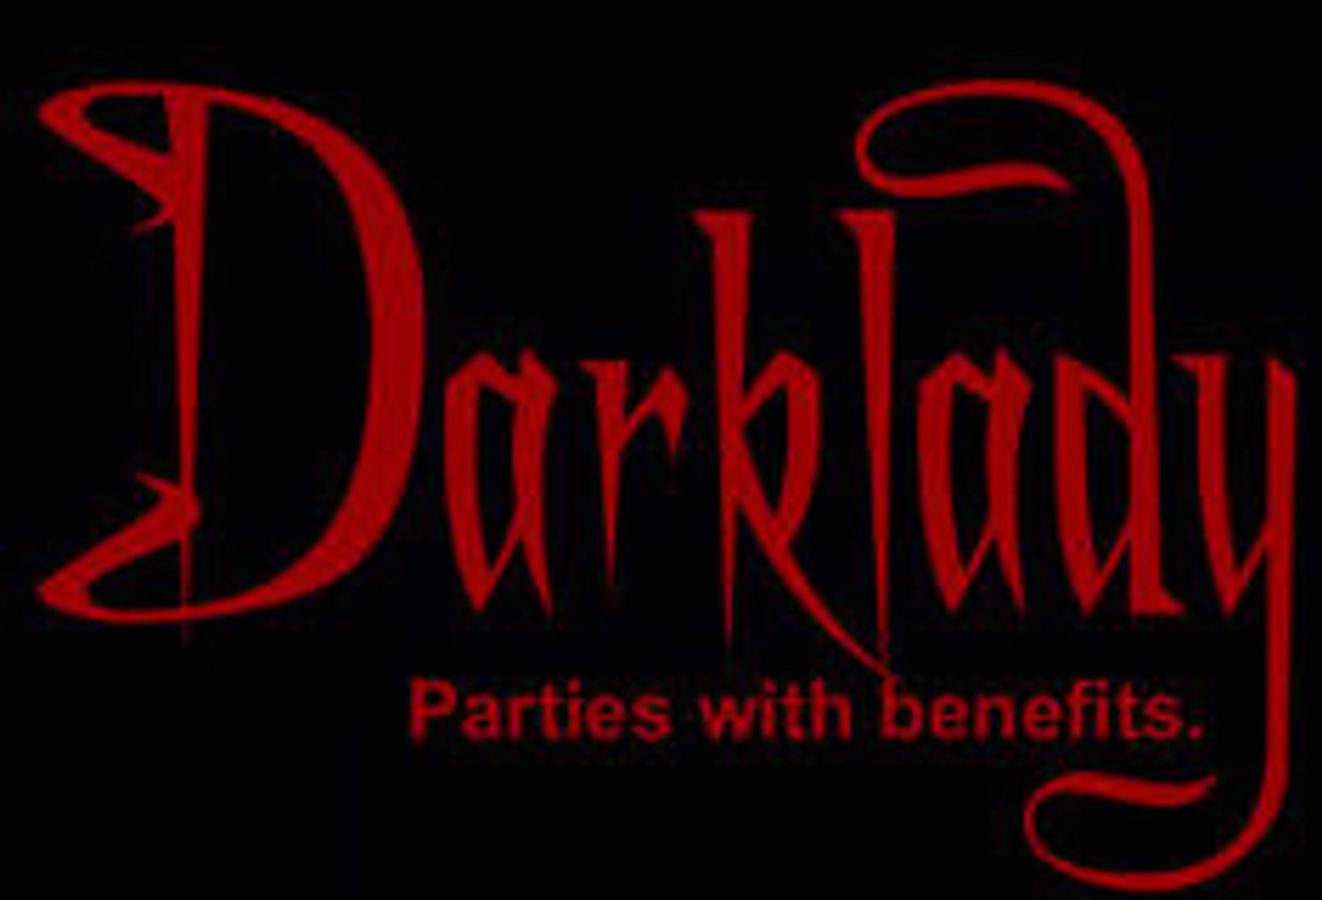 Darklady Productions, Inc.